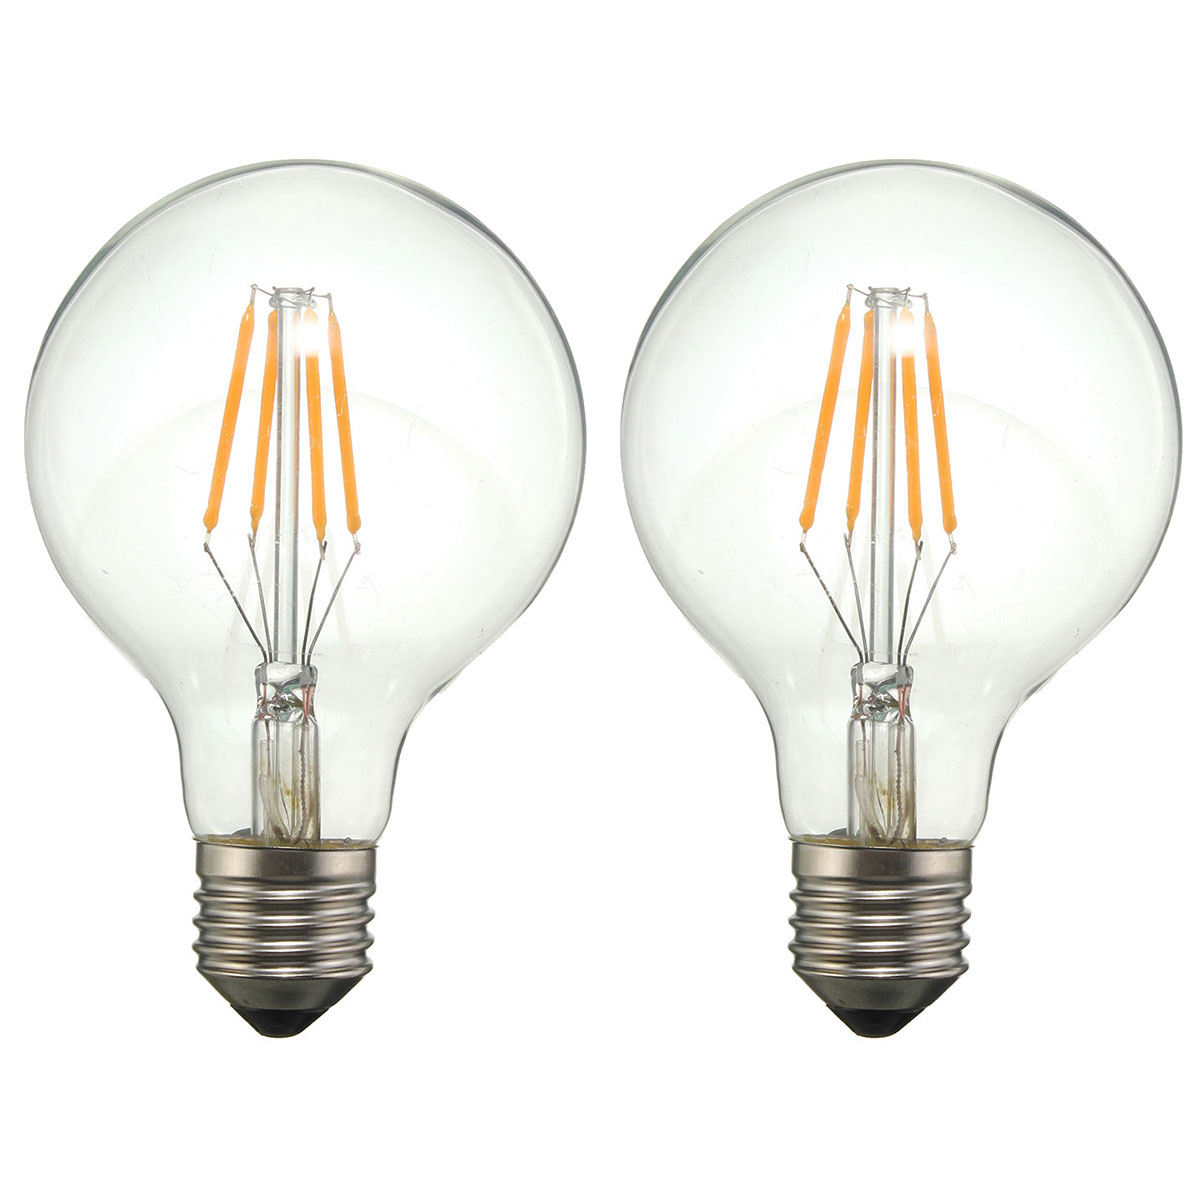 Dimmable-G80-E27-4W-COB-Warm-White-400Lumens-Incandescent-Edison-Retro-Light-Lamp-Bulb-AC110V-AC220V-1068937